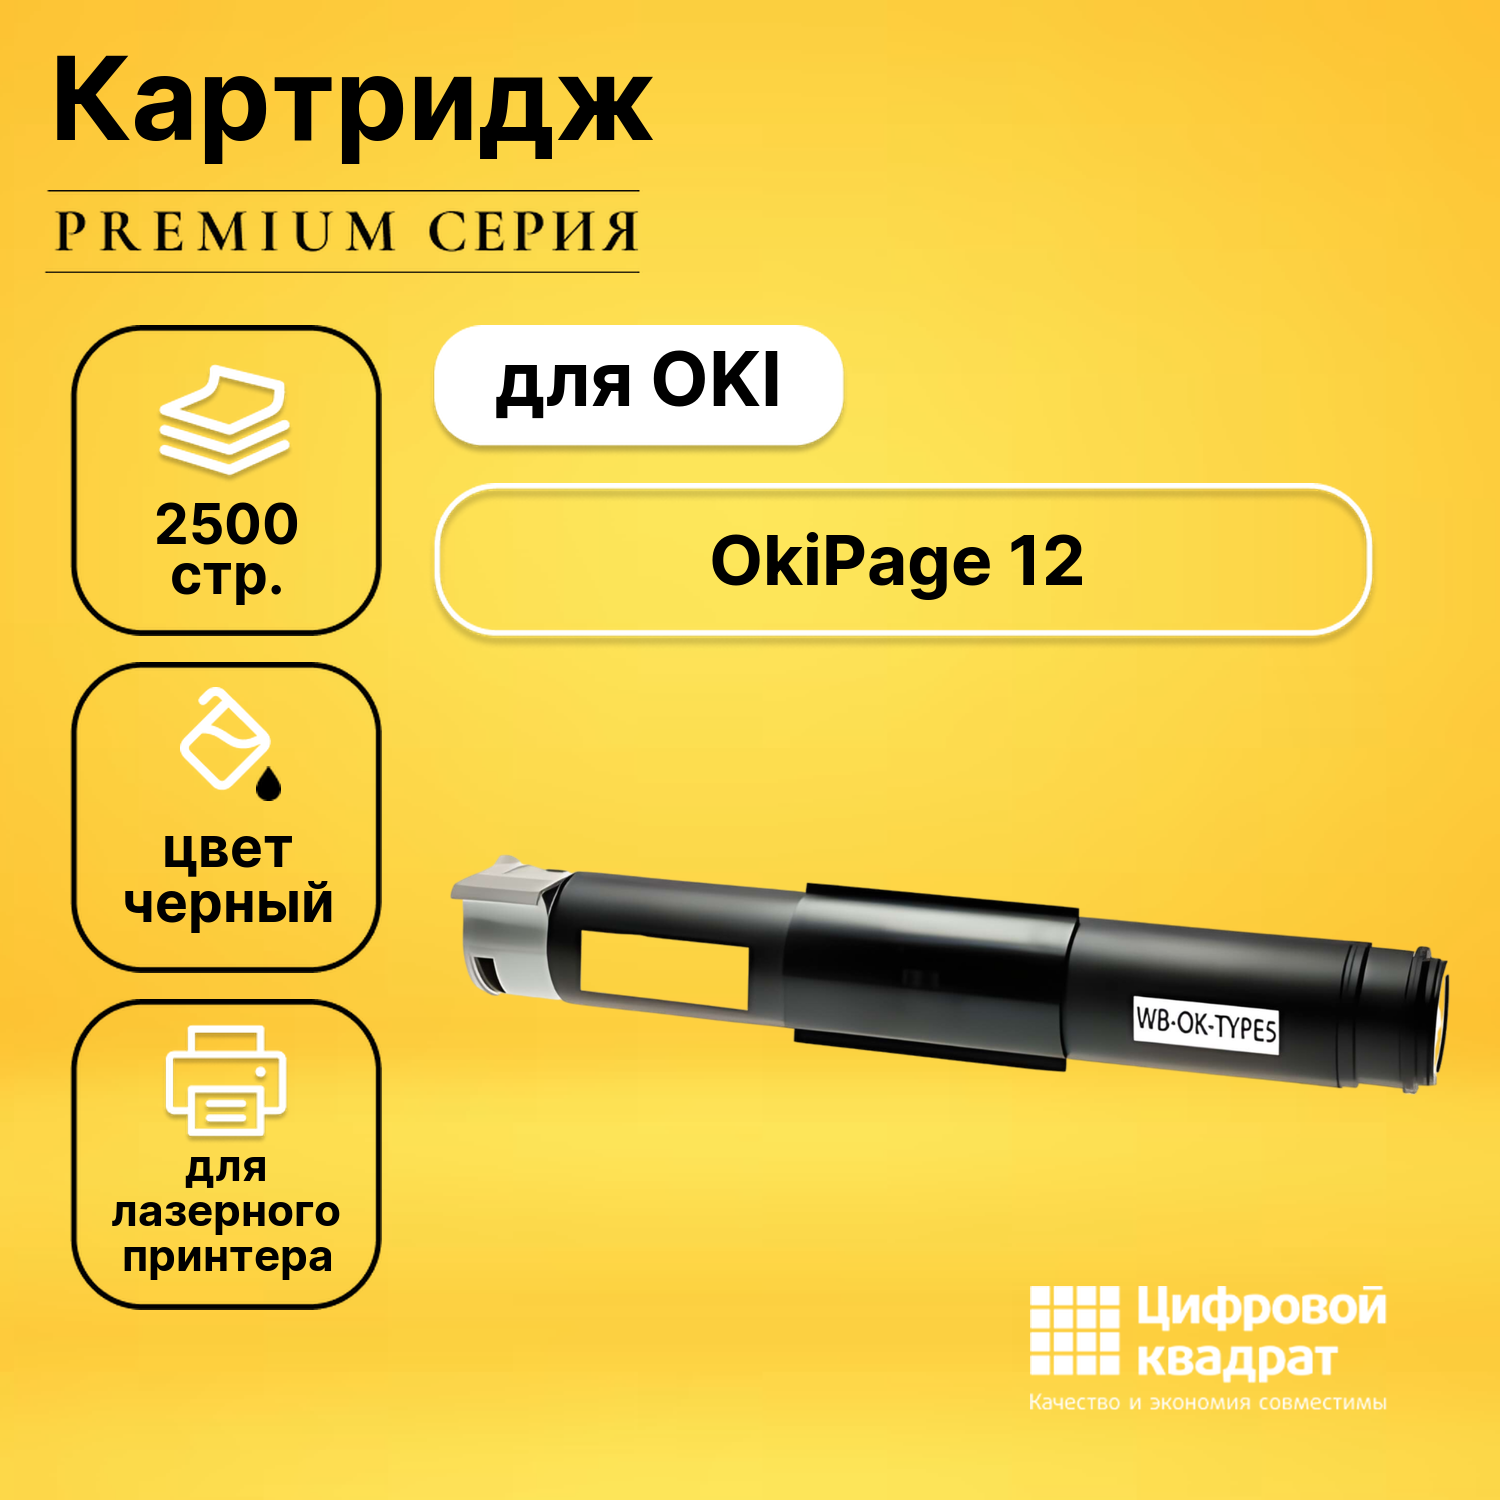 Картридж DS для OKI OkiPage 12 совместимый